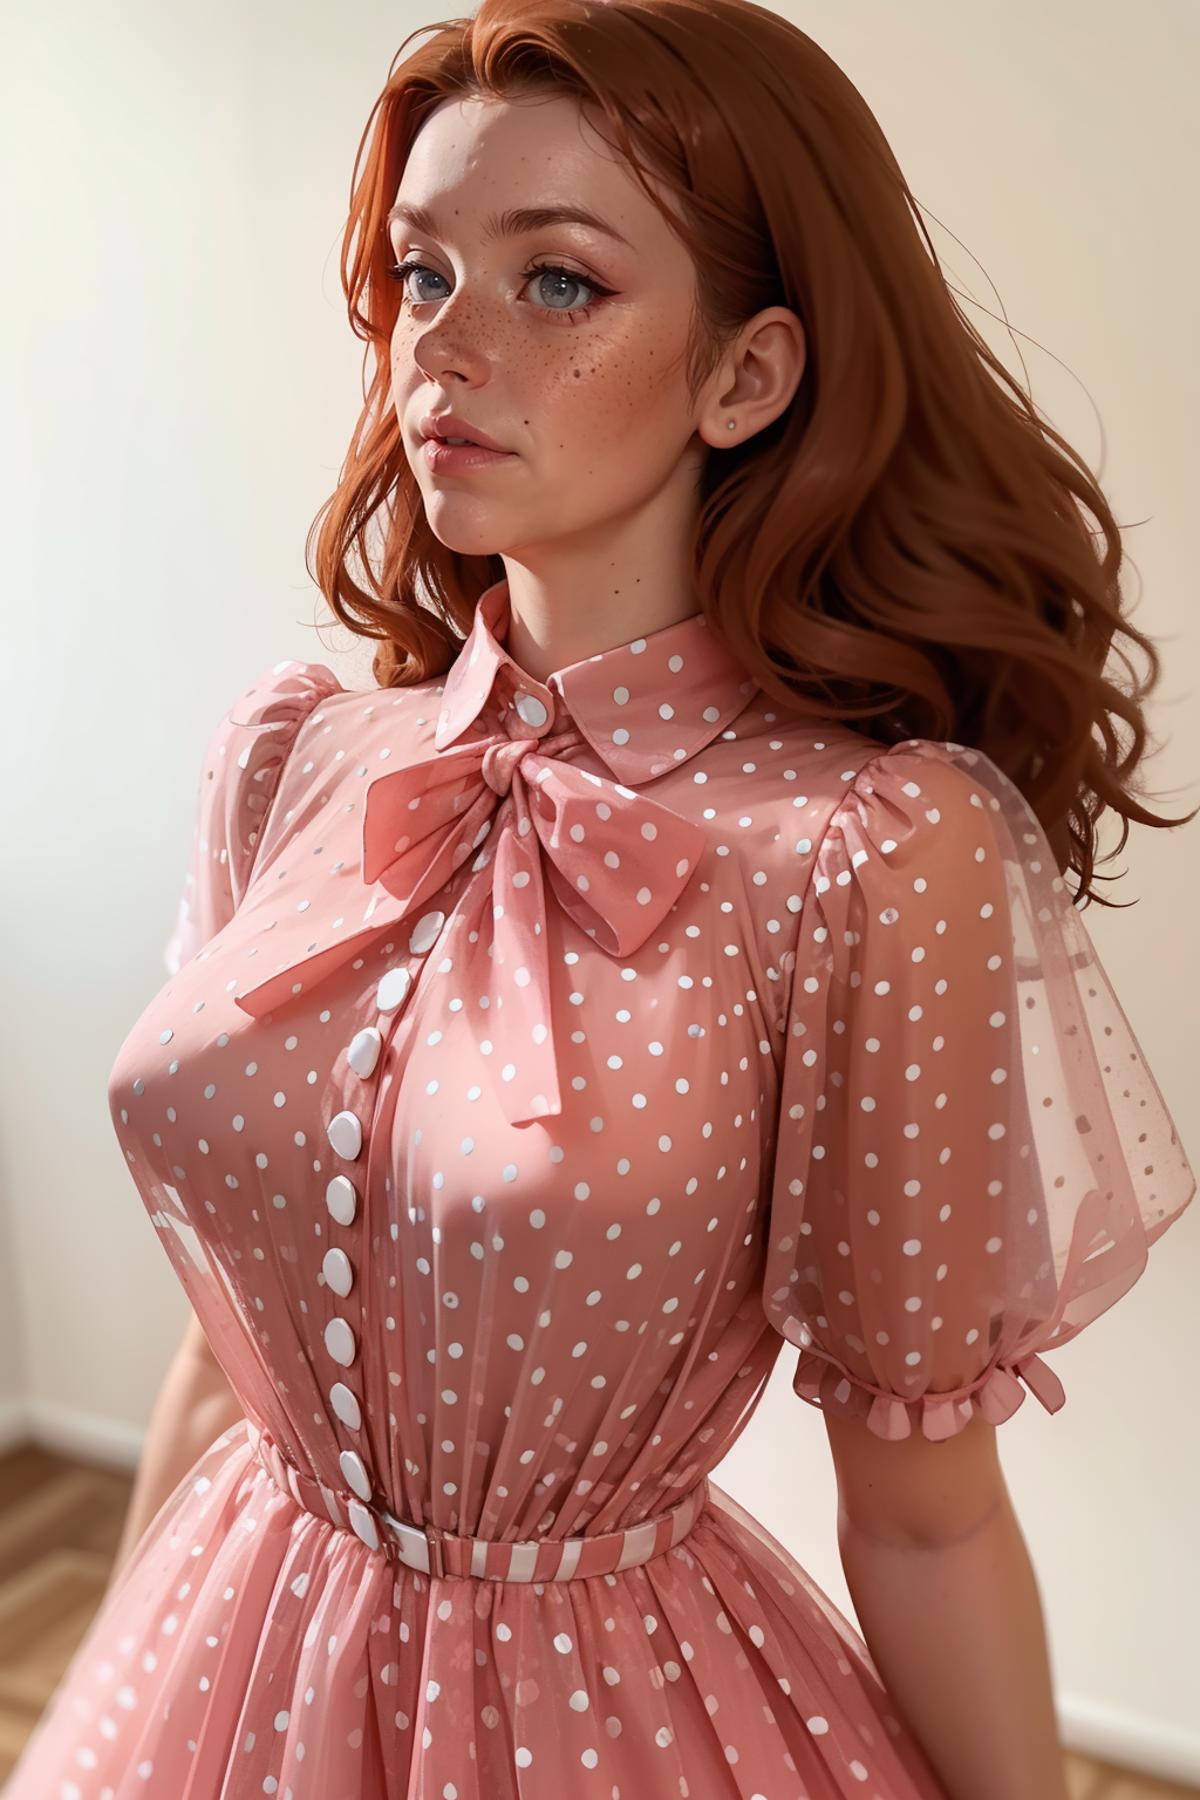 Polka Dot Peachy Dress image by freckledvixon